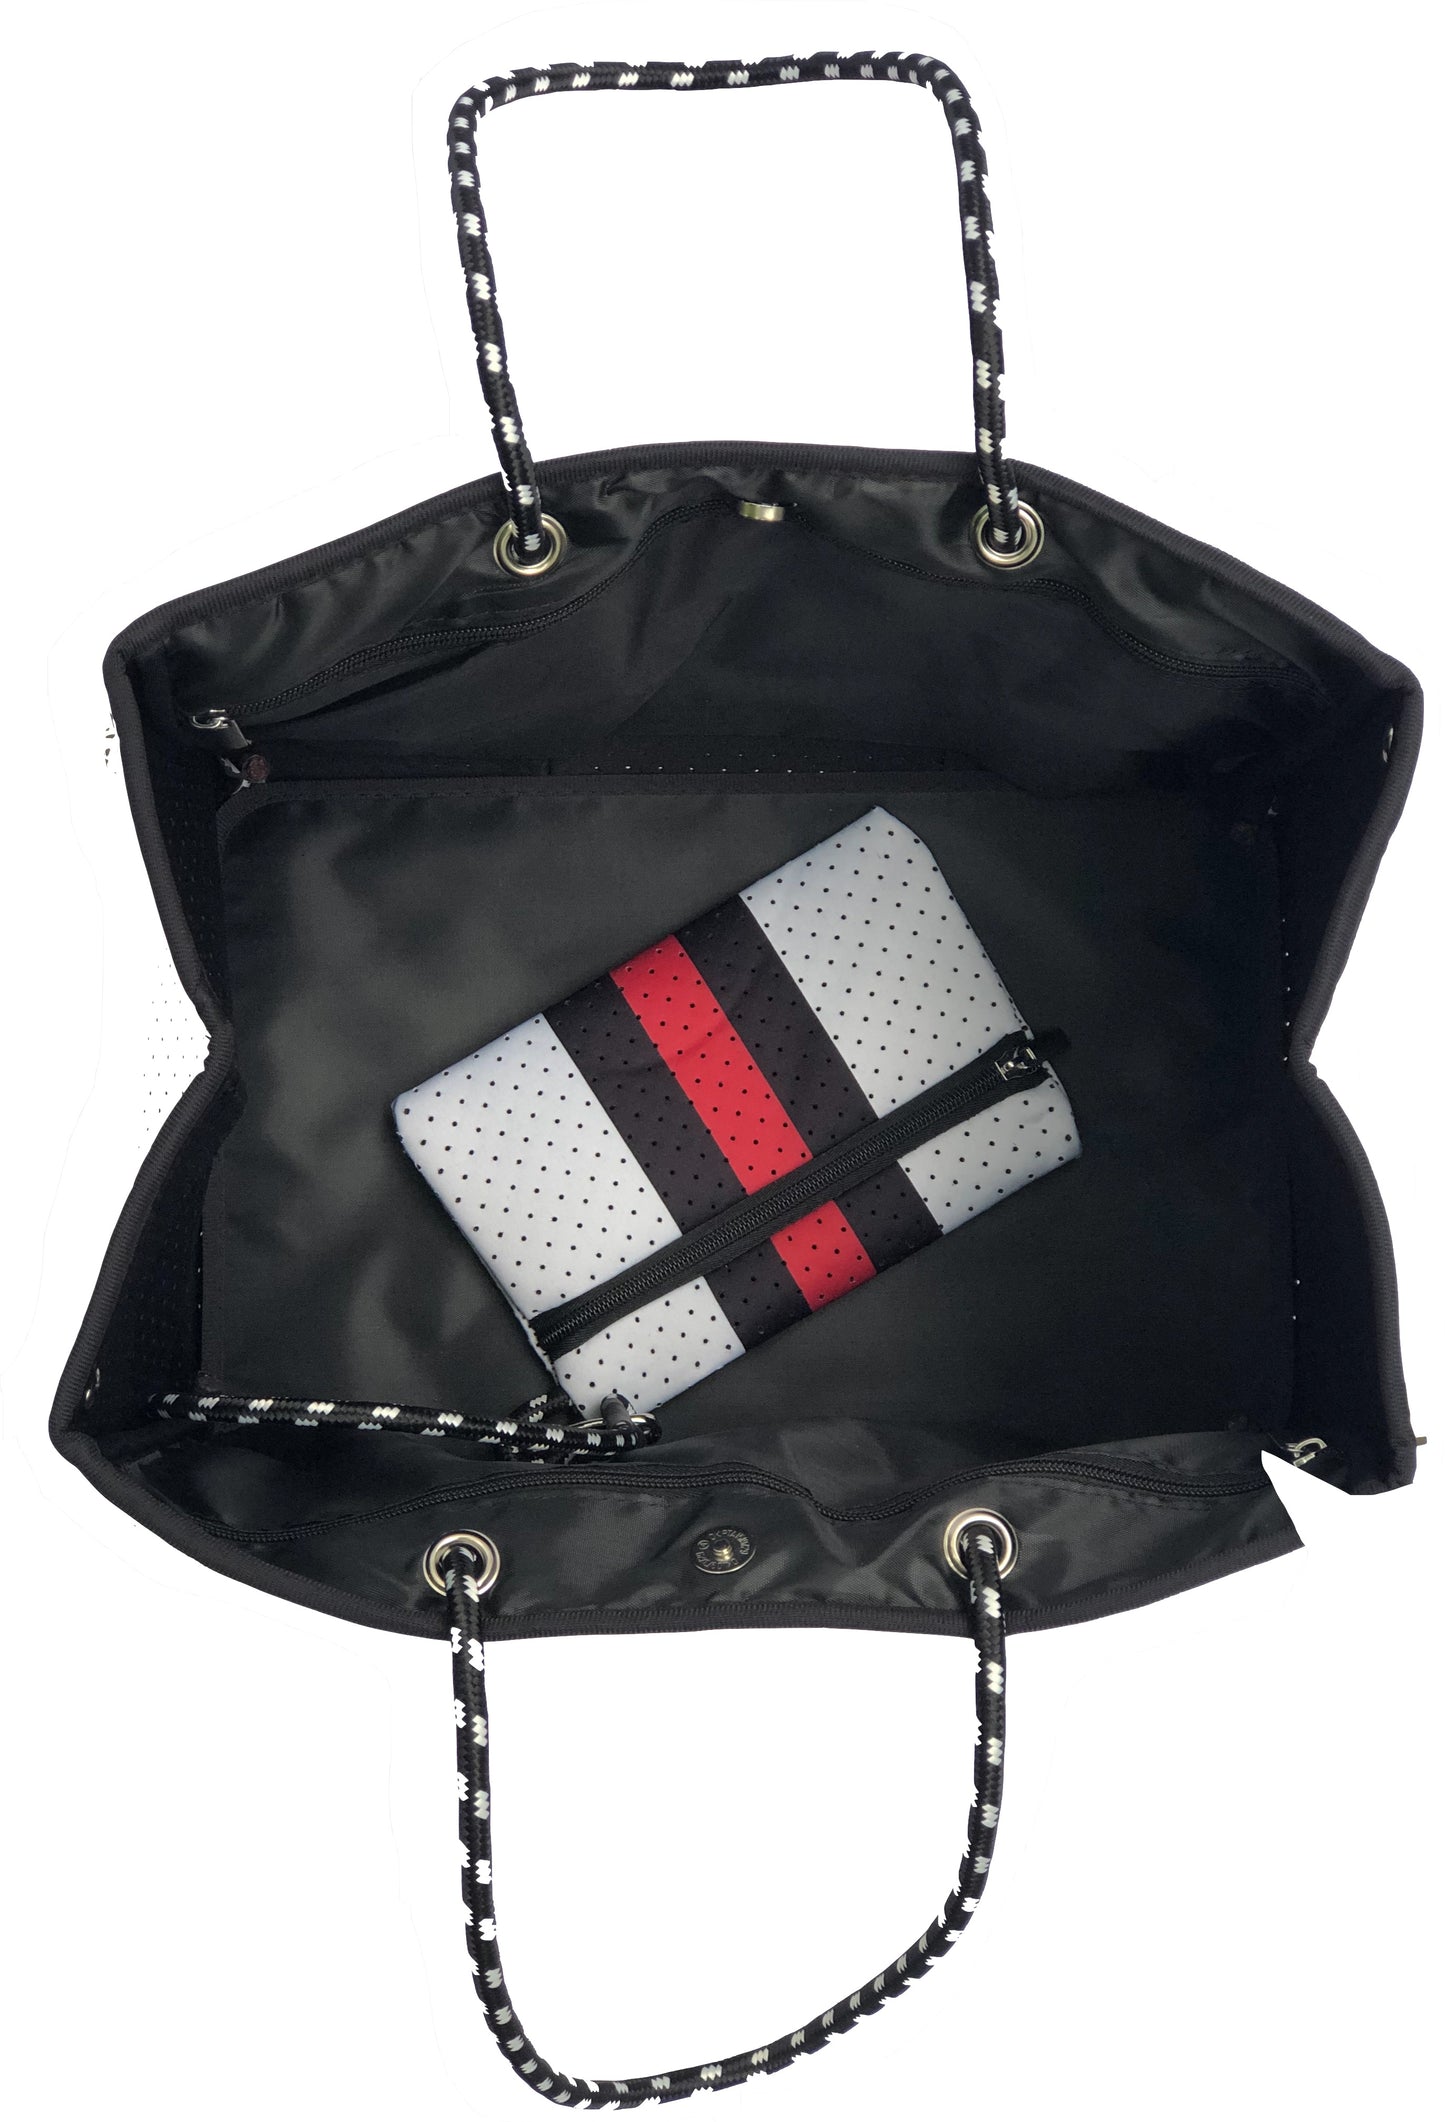 Neoprene Tote Bag by Dallas Hill Design White Bag Red & Black Stripes